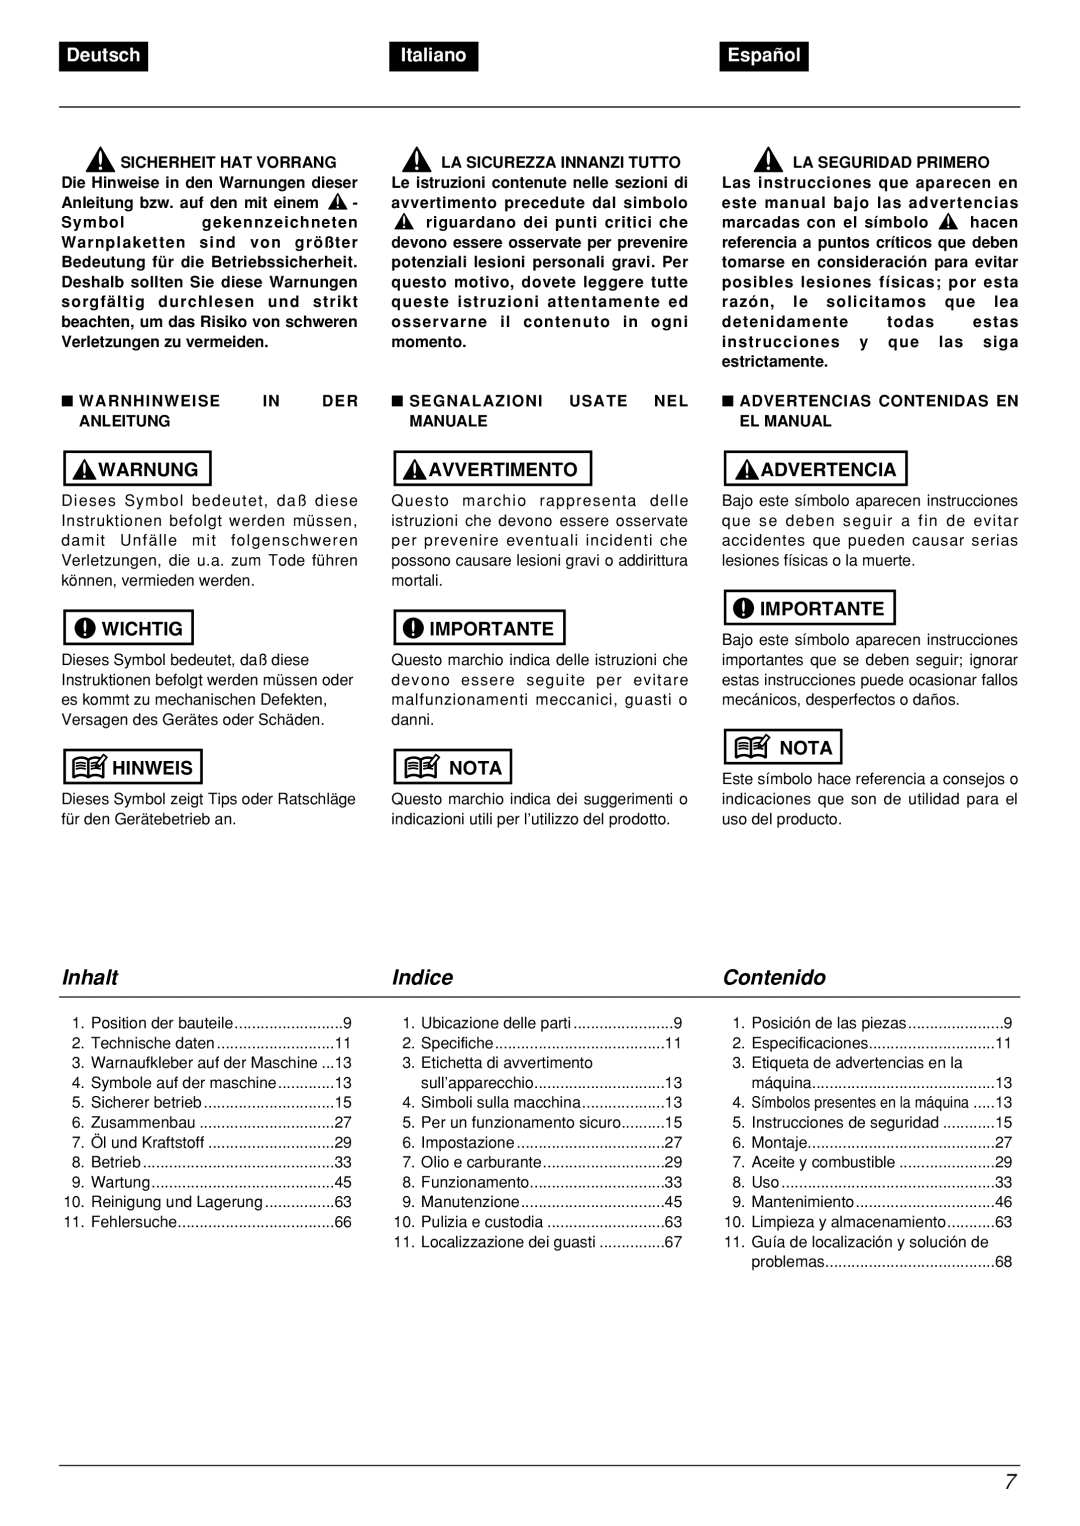 Zenoah BCX2601DL manual Inhalt, Indice, Contenido, Deutsch, Italiano, Español 